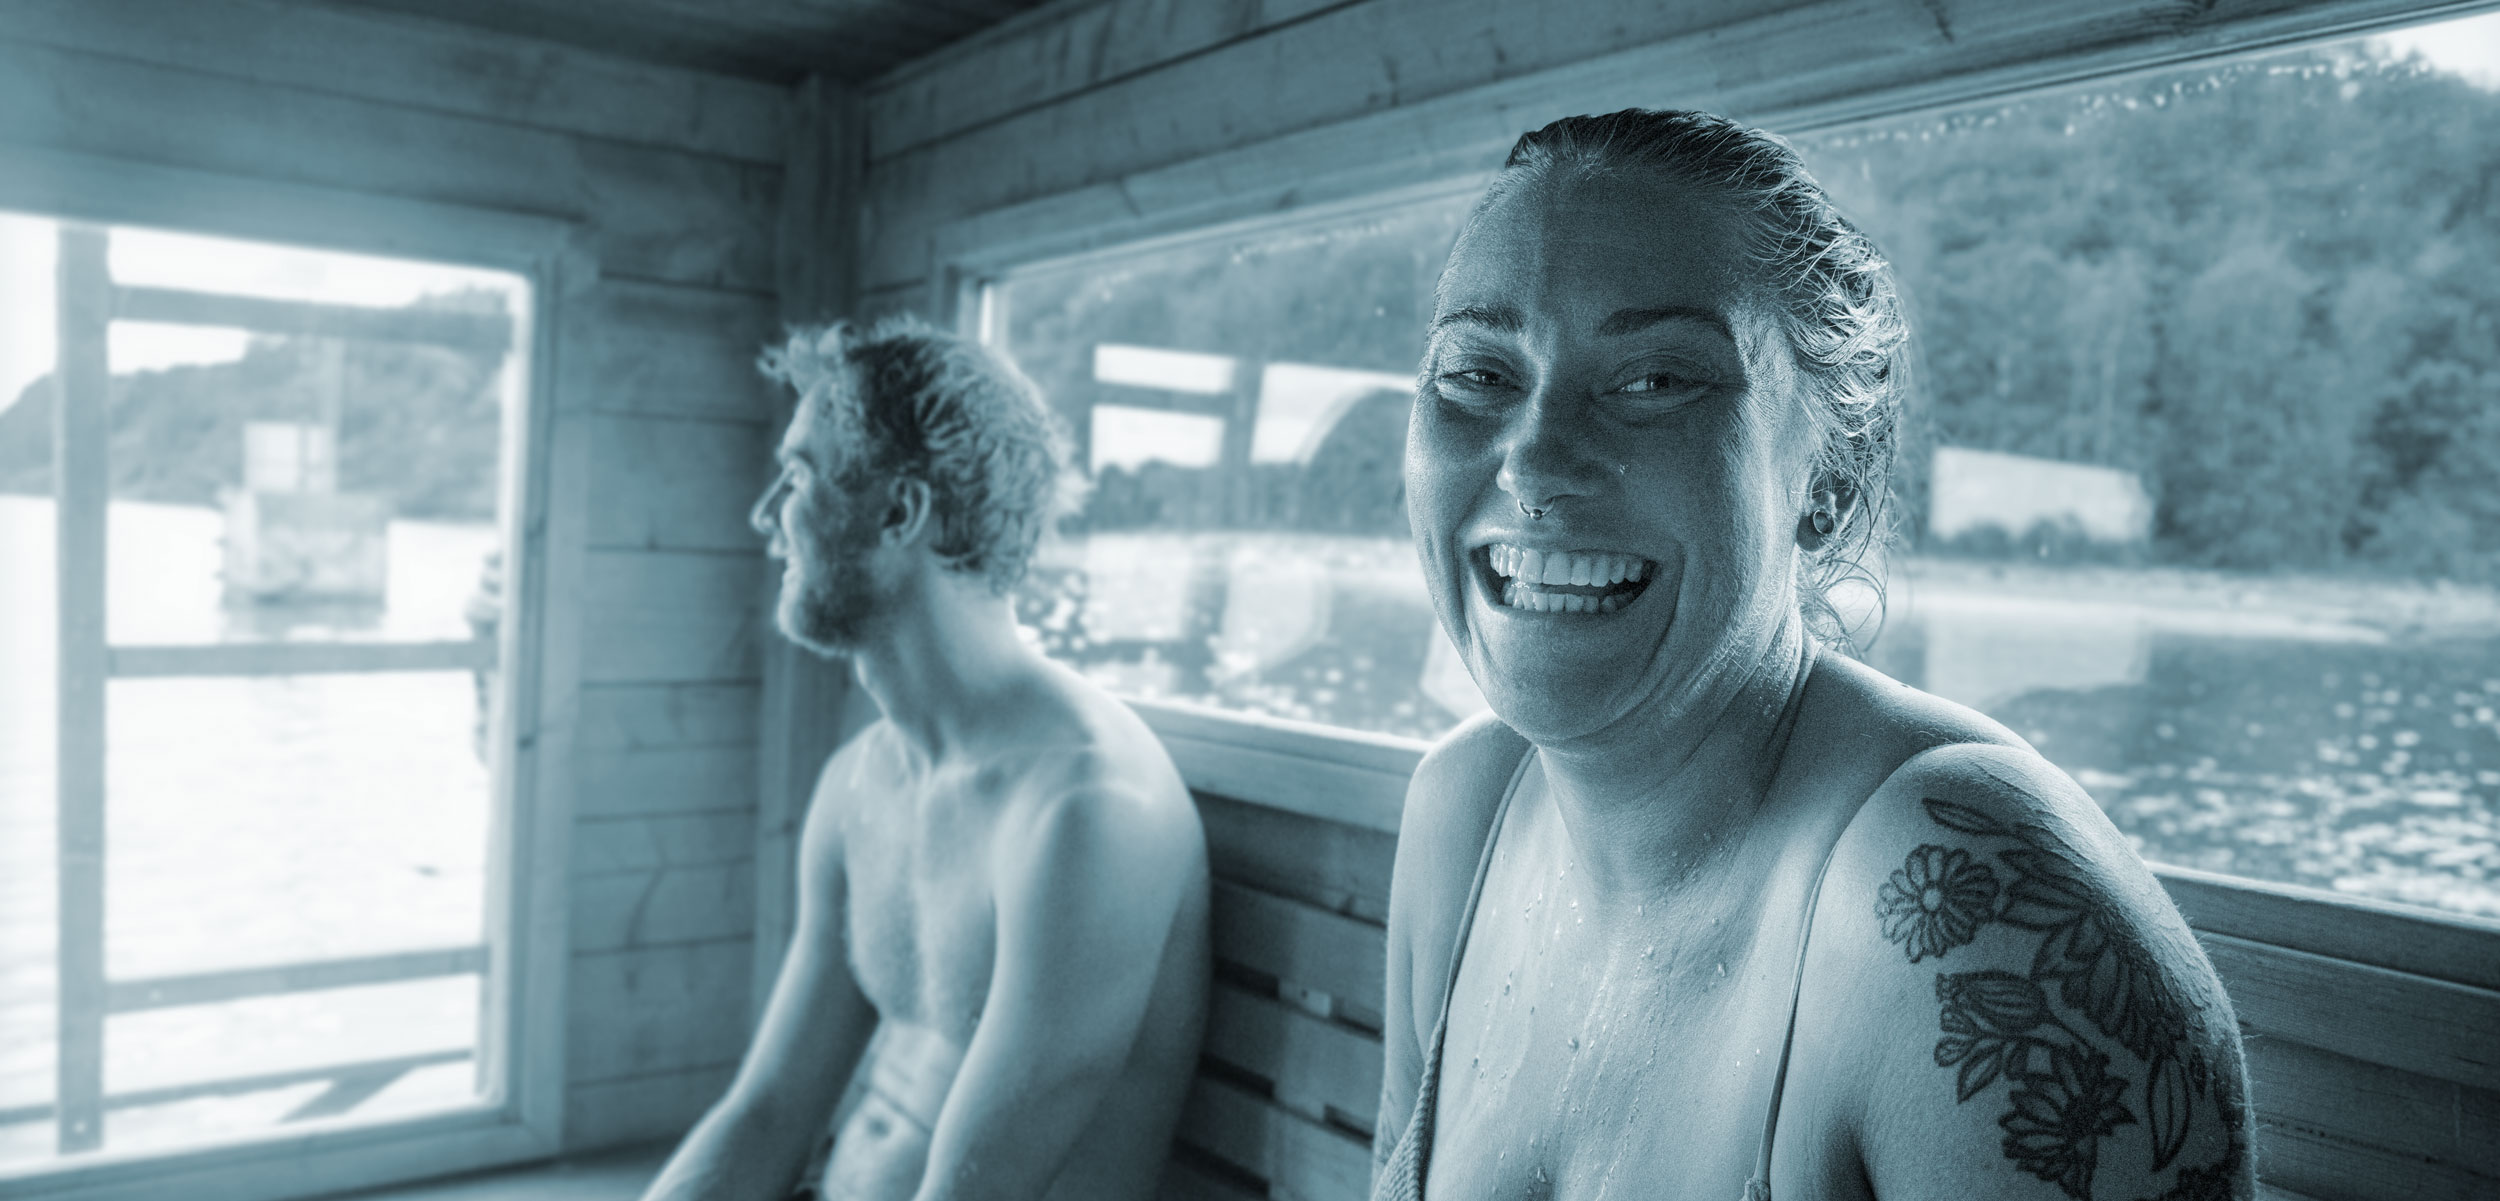 Sofia Green in a floating sauna